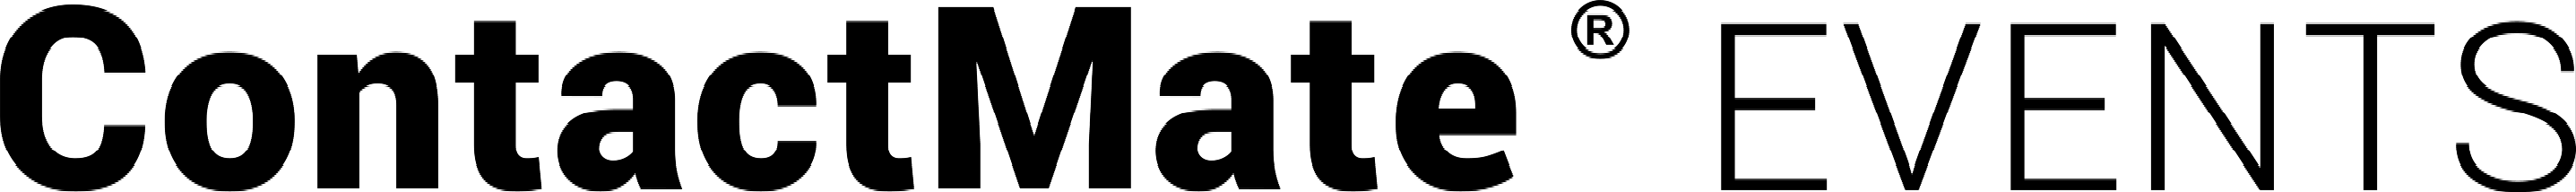 contactmate logo